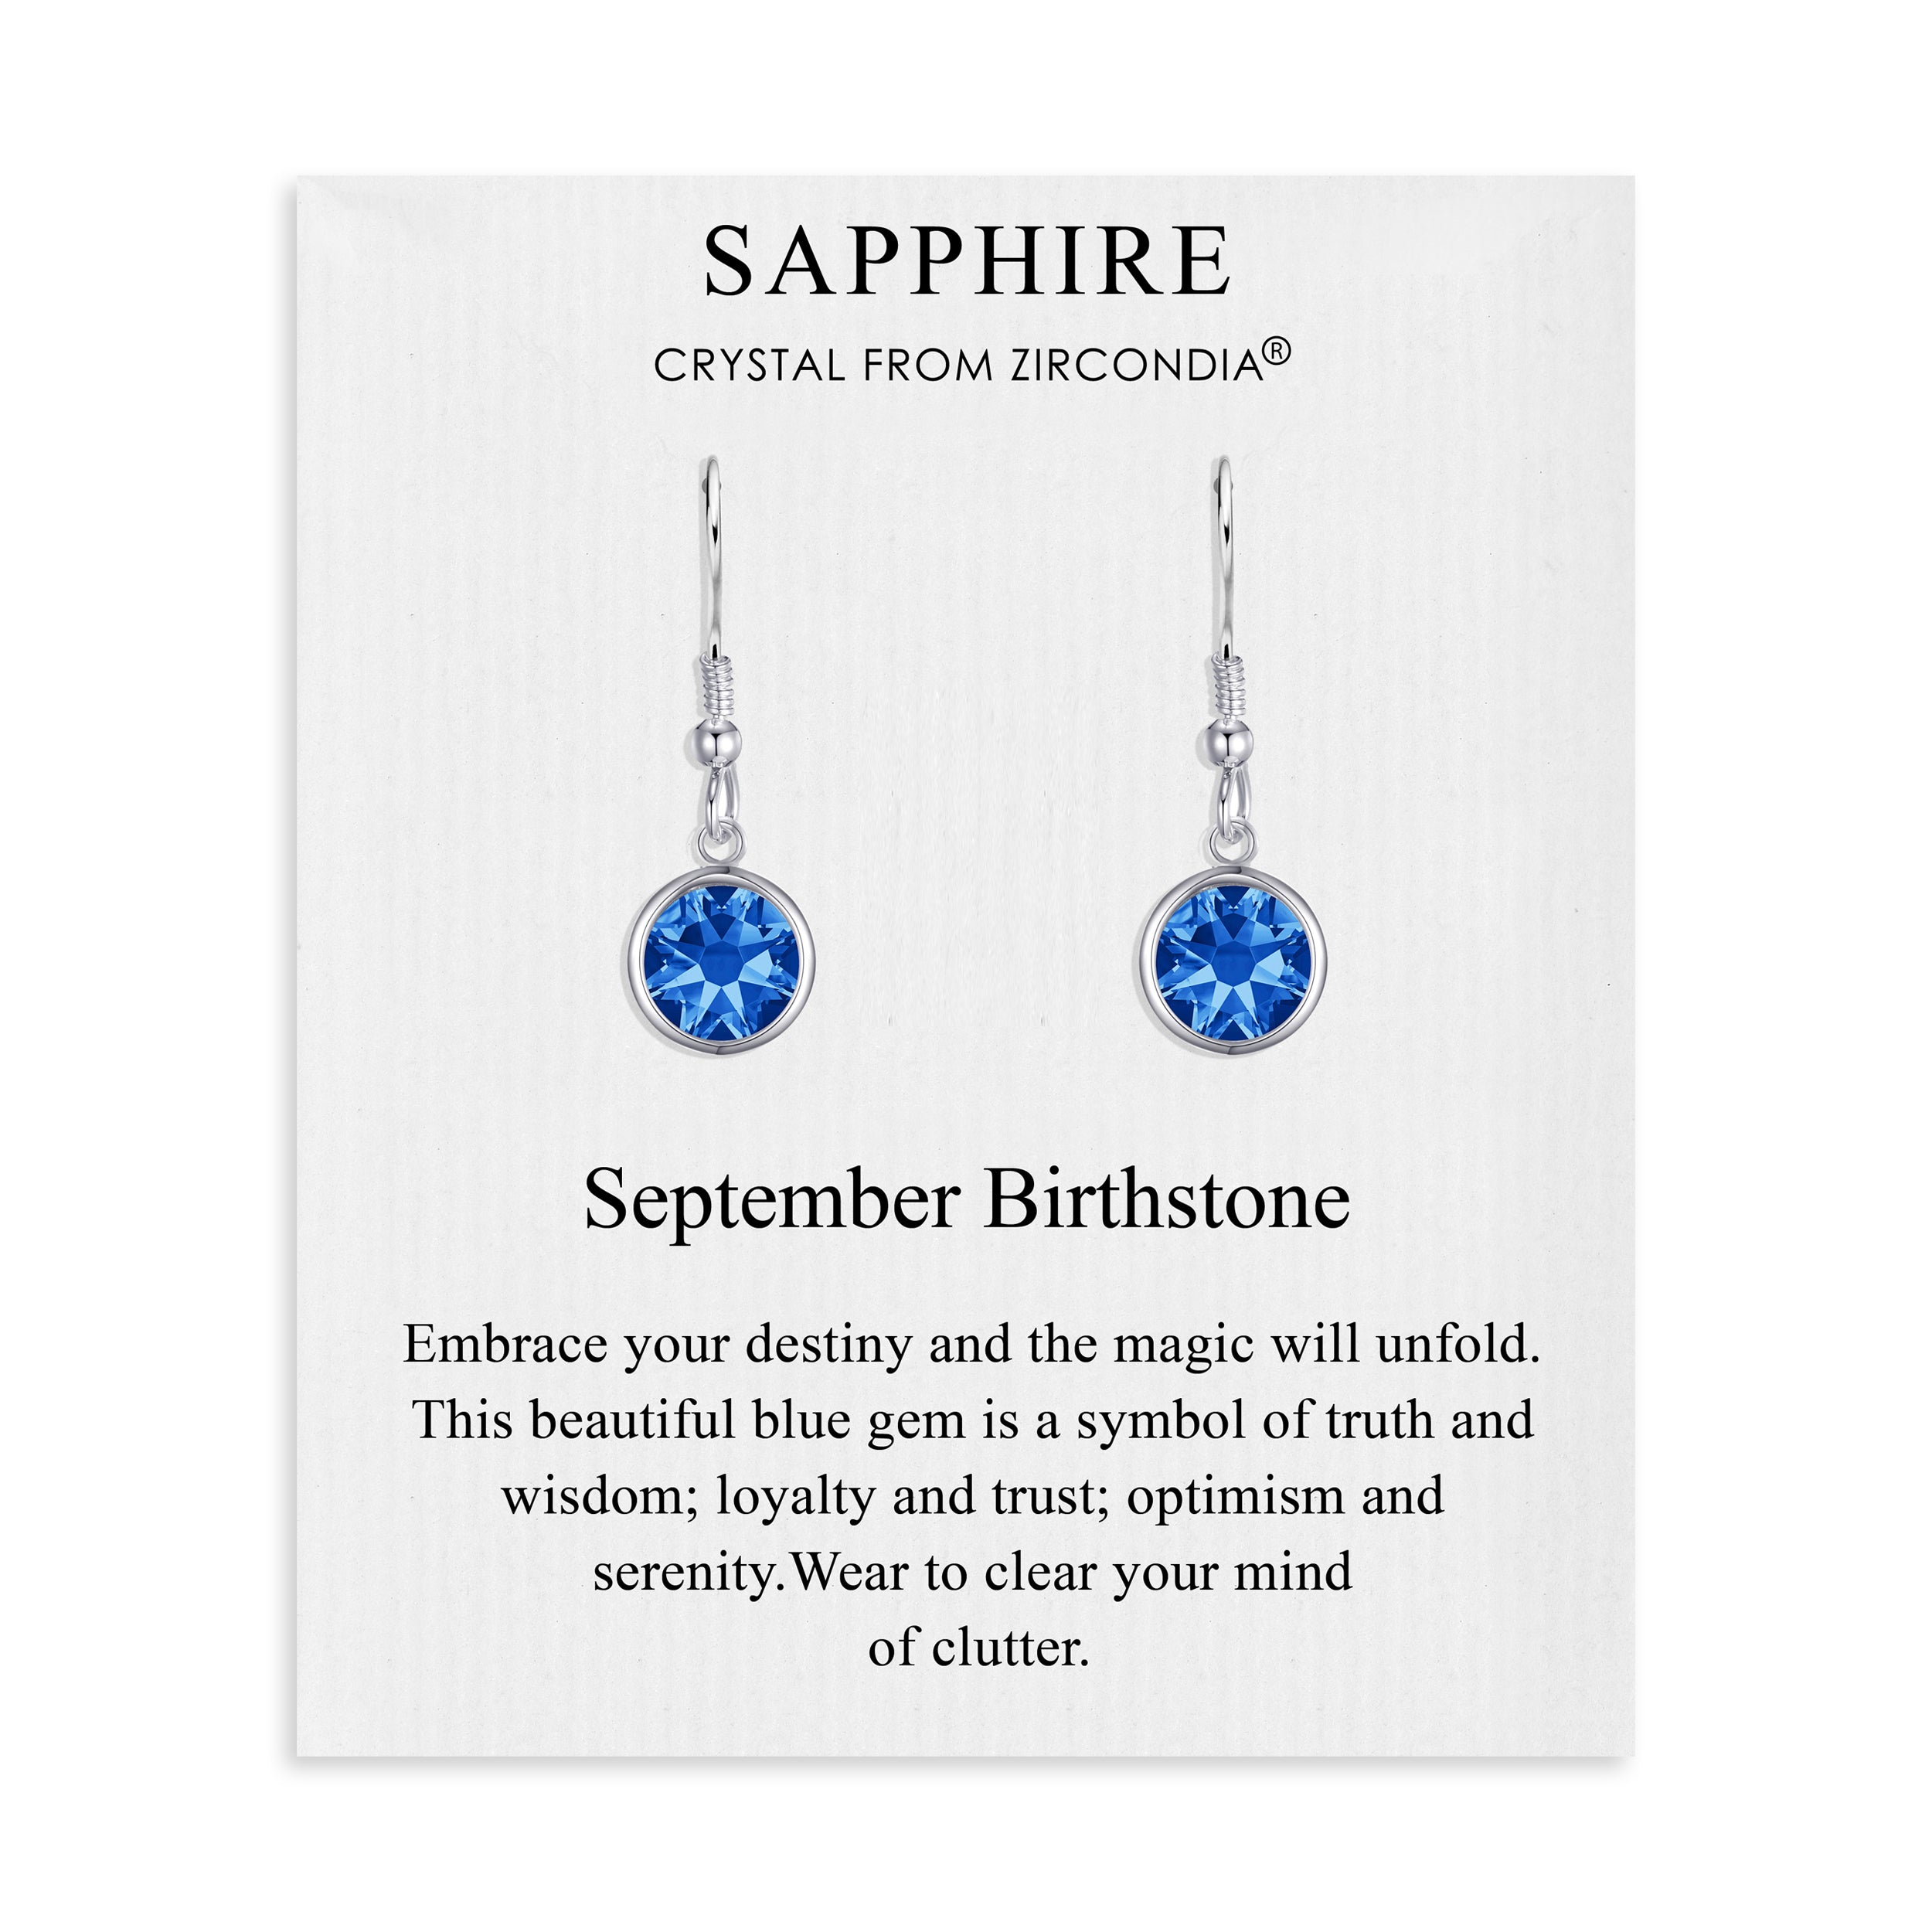 September Birthstone Drop Earrings Created with Sapphire Zircondia® Crystals by Philip Jones Jewellery